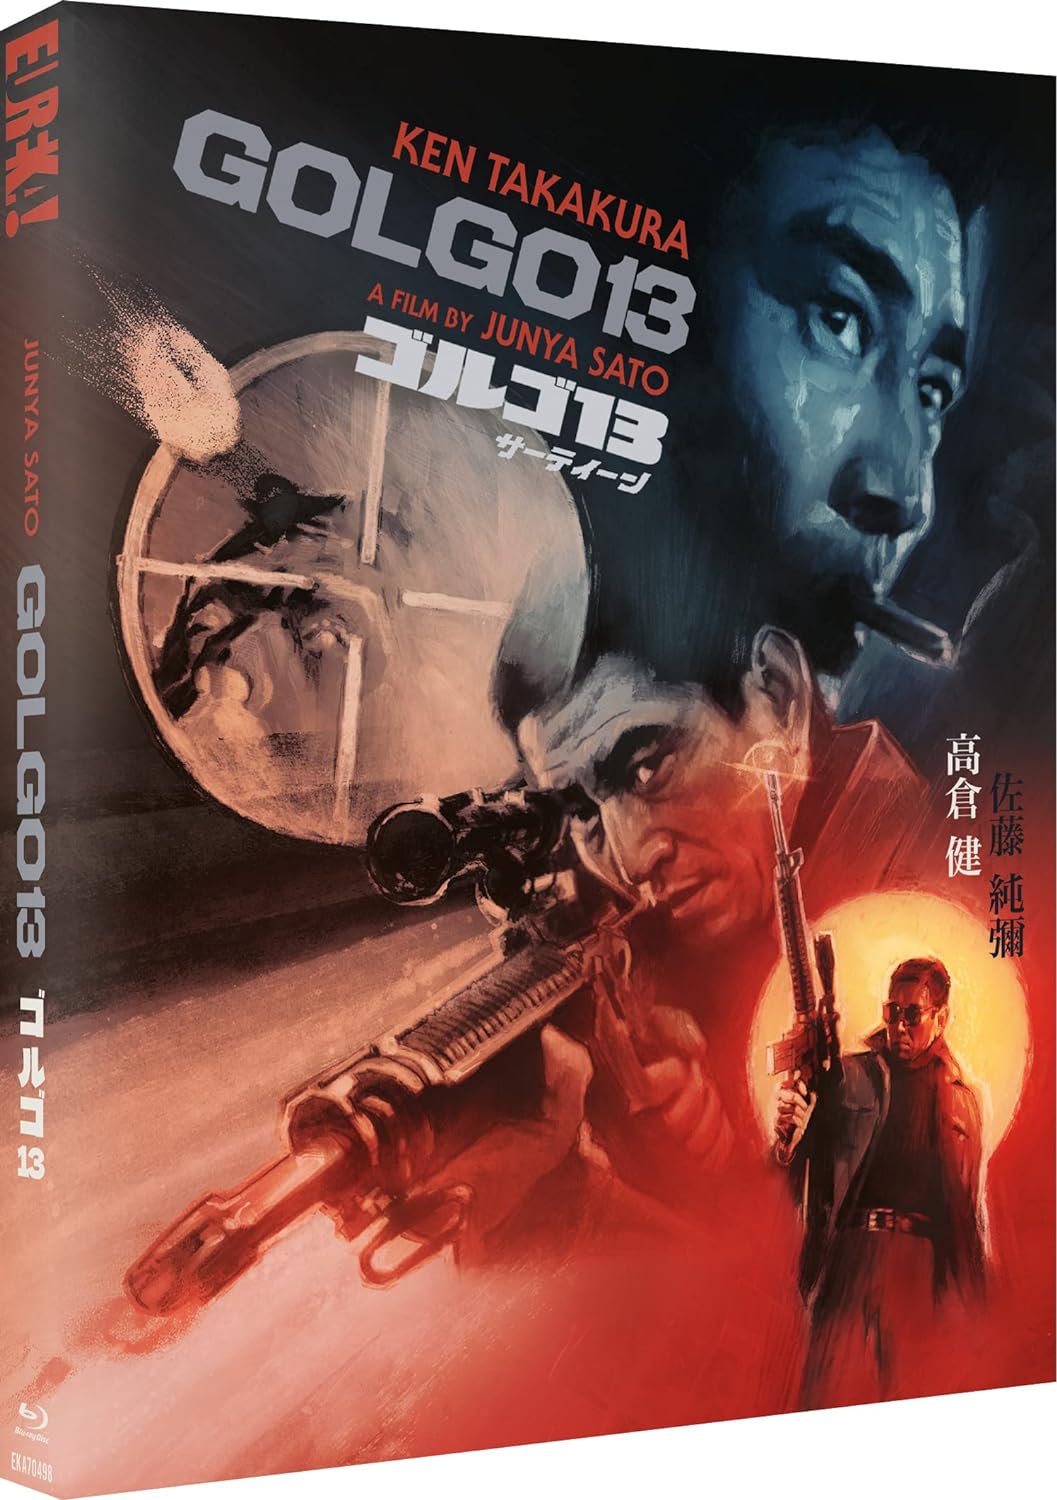 Golgo 13 Limited Edition Blu-ray with Slipcover (Eureka/Region B)